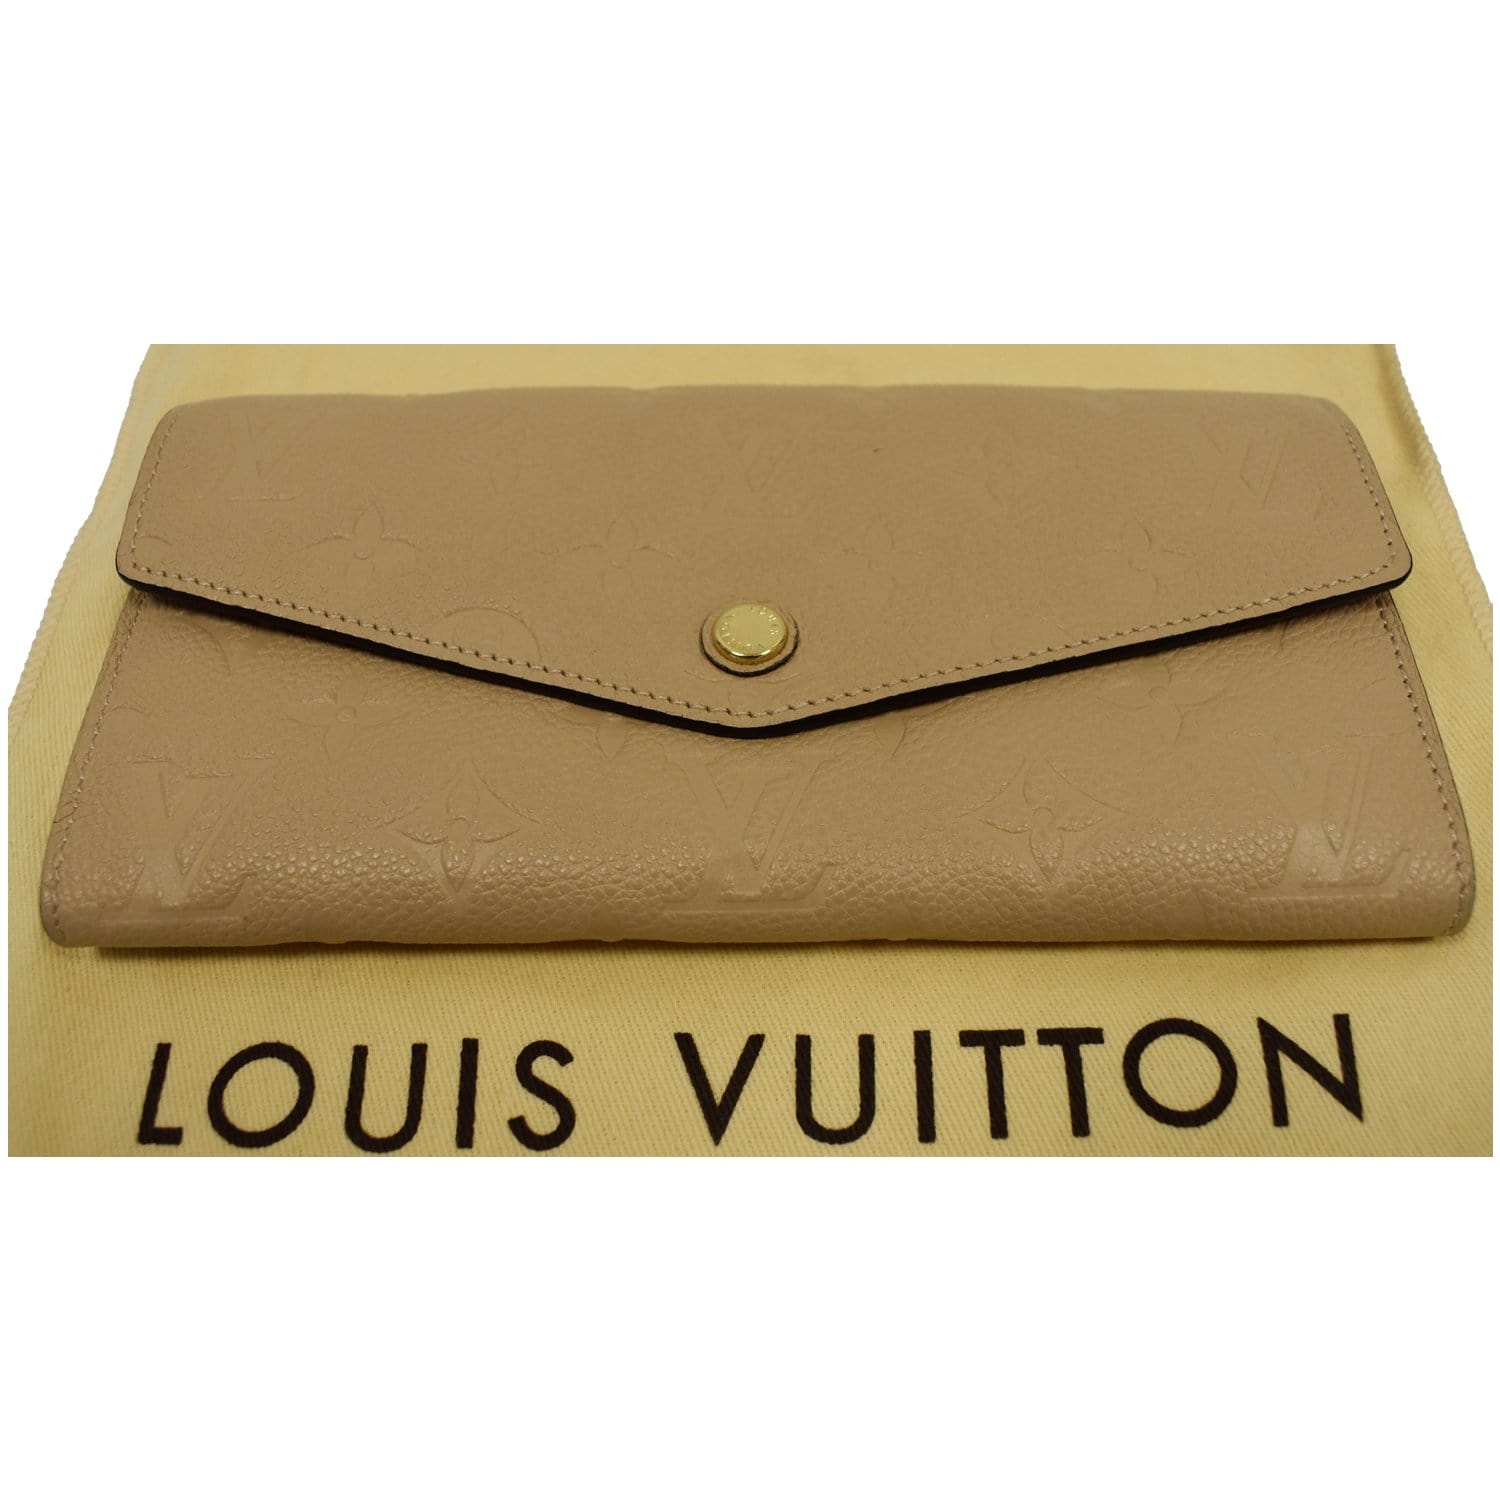 Louis Vuitton Rucksäcke aus Leder - Braun - 29496201